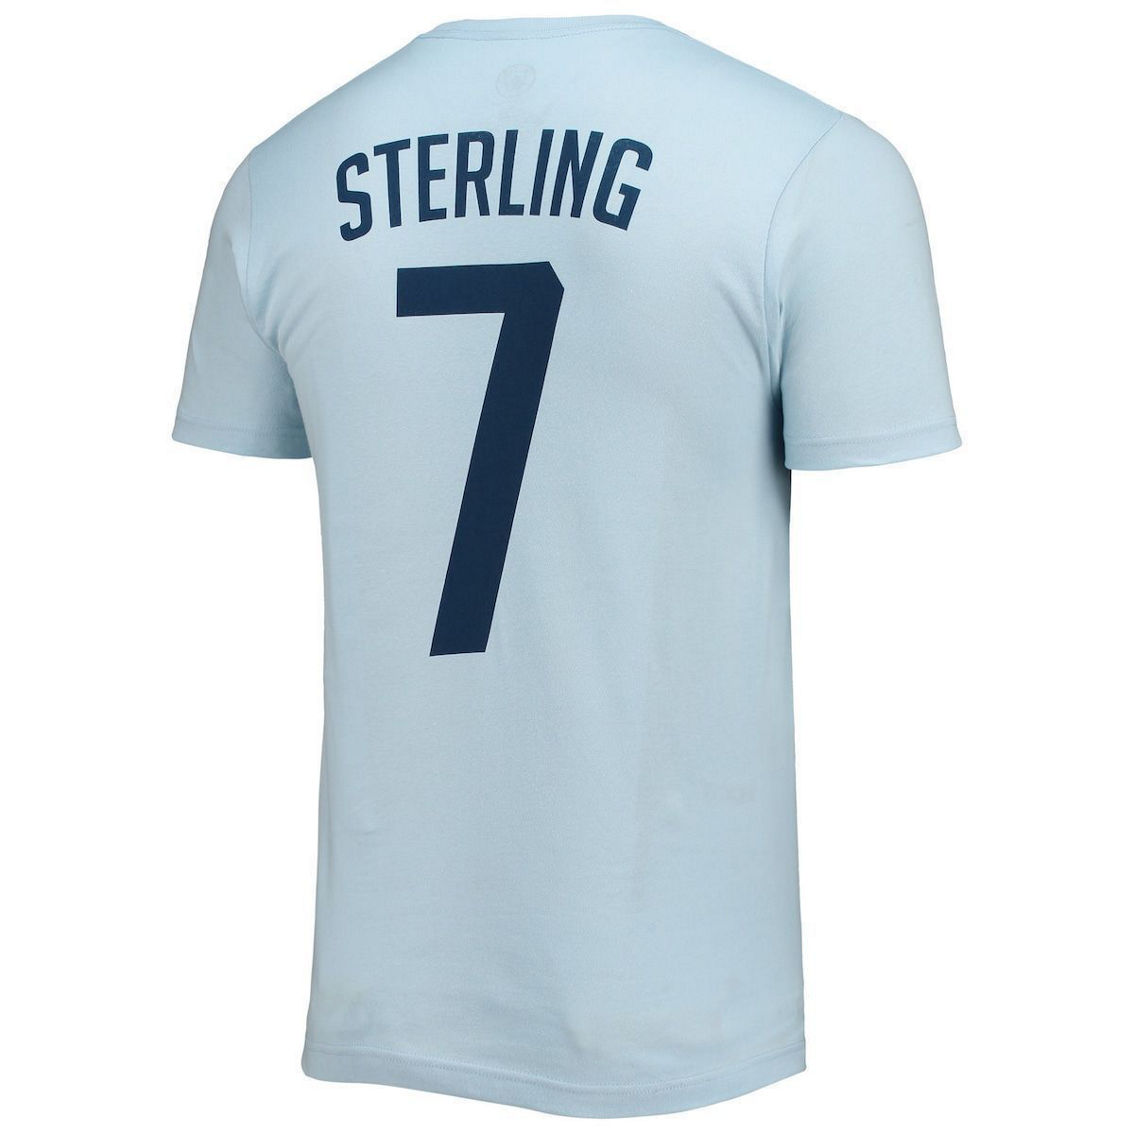 Fifth Sun Men's Raheem Sterling Light Blue Manchester City Name & Number T-Shirt - Image 4 of 4